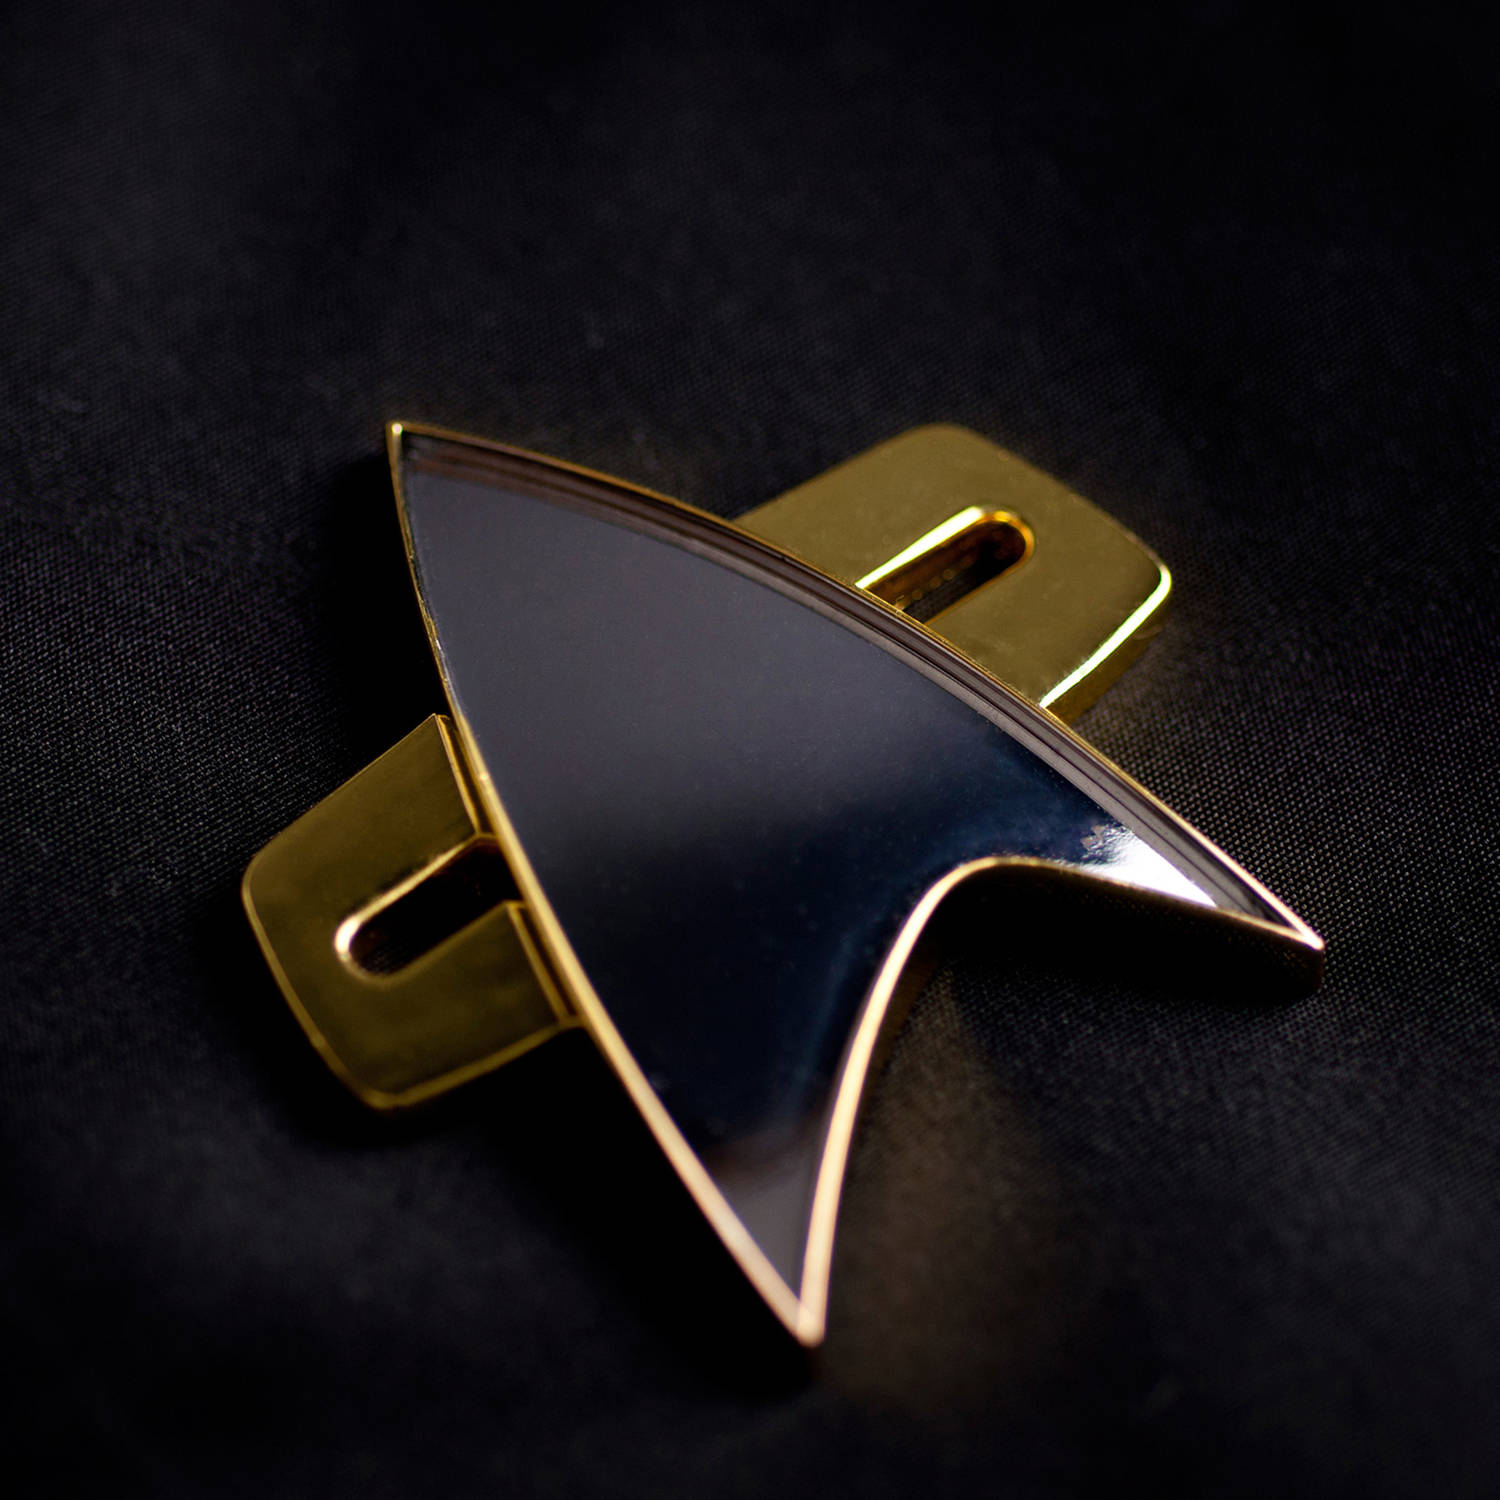 Star Trek Voyager Communication Badge Replica - 4